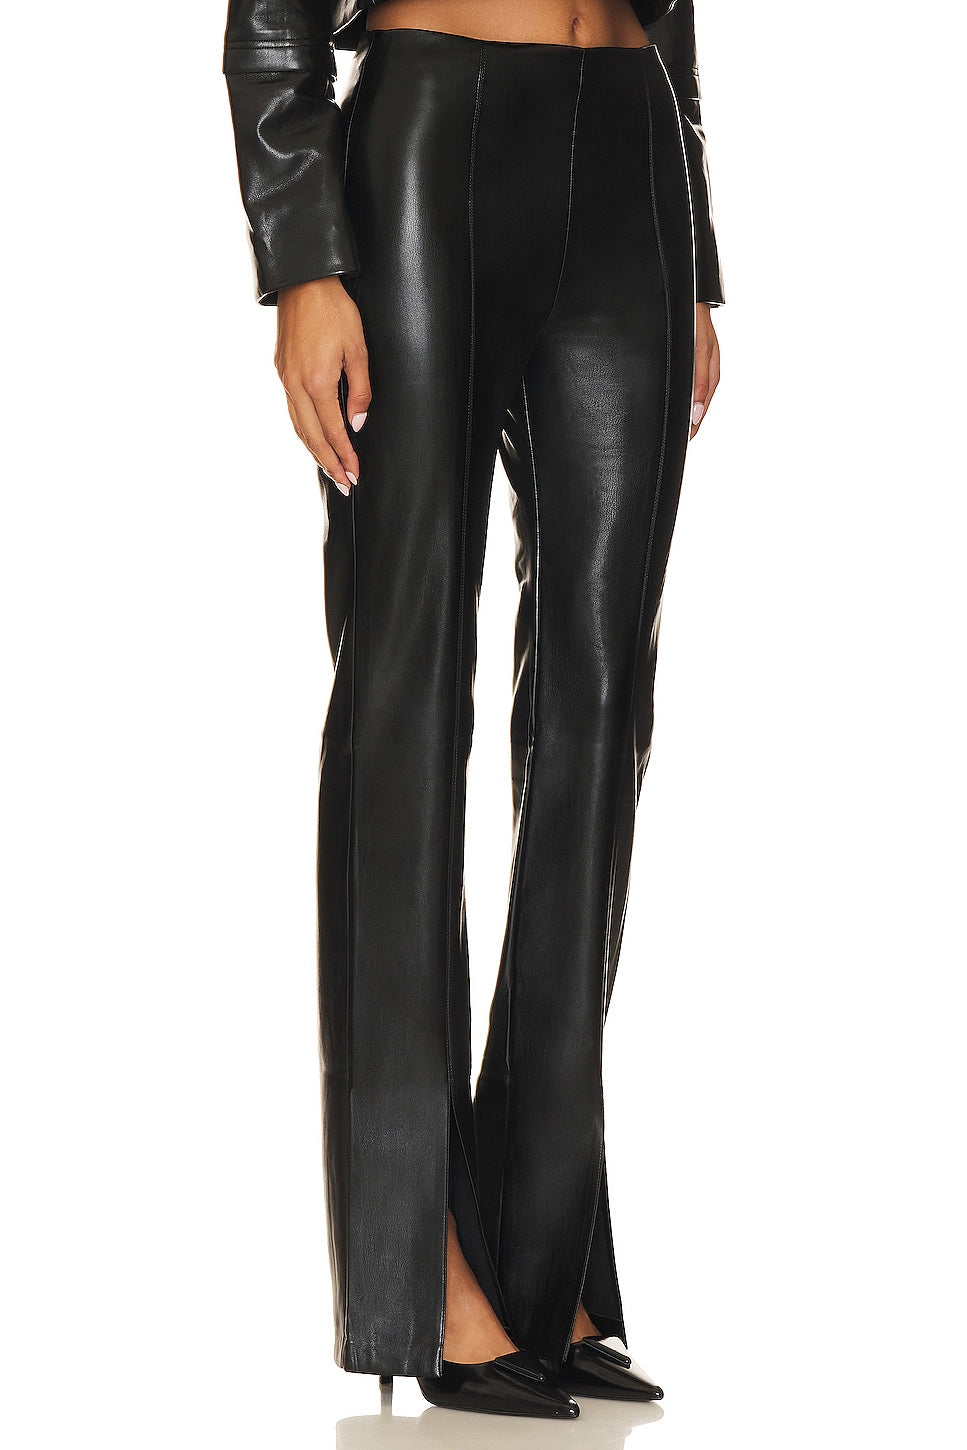 Amanda Uprichard Faux Leather Tavira Pants in Black